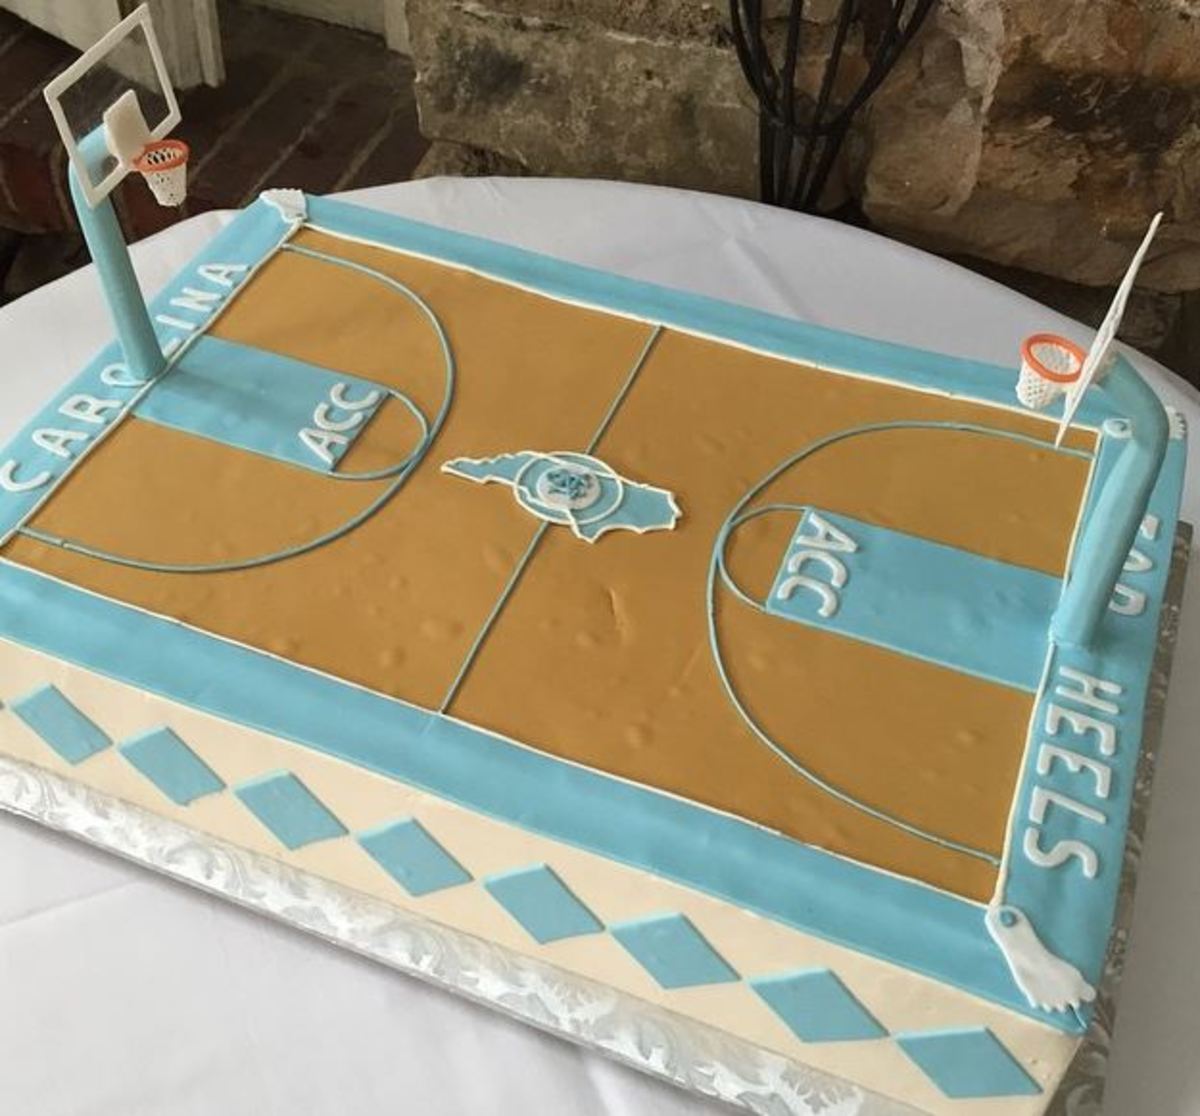 grooms Cake of North Carolina's basketball court.